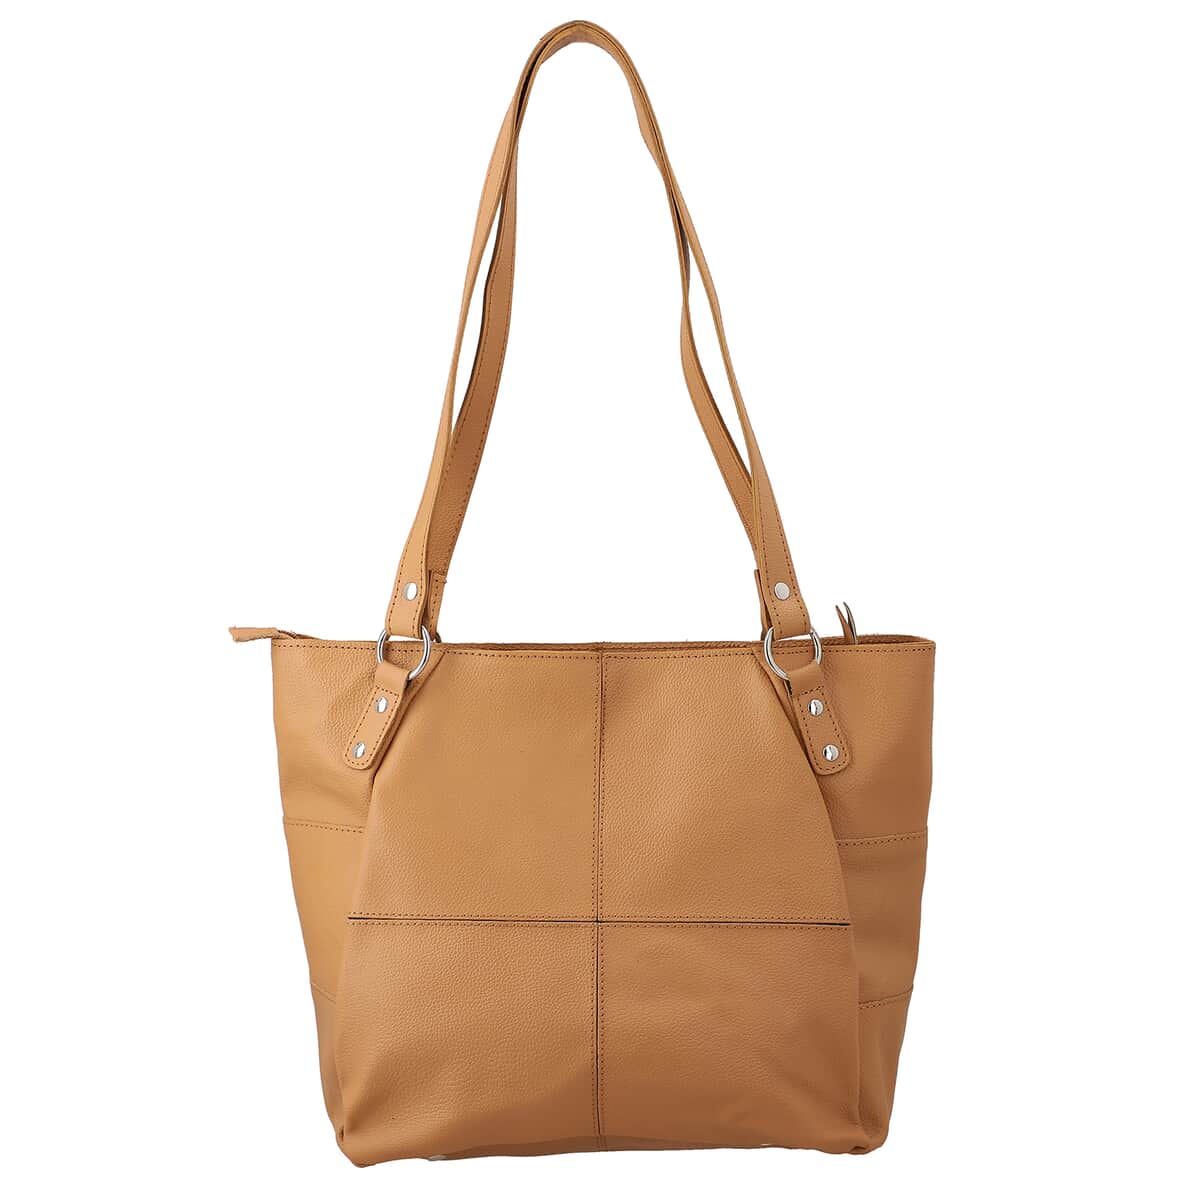 Shop LC NEWAGE Genuine Leather Shoulder Bag with Fixed Strap Women Handbag